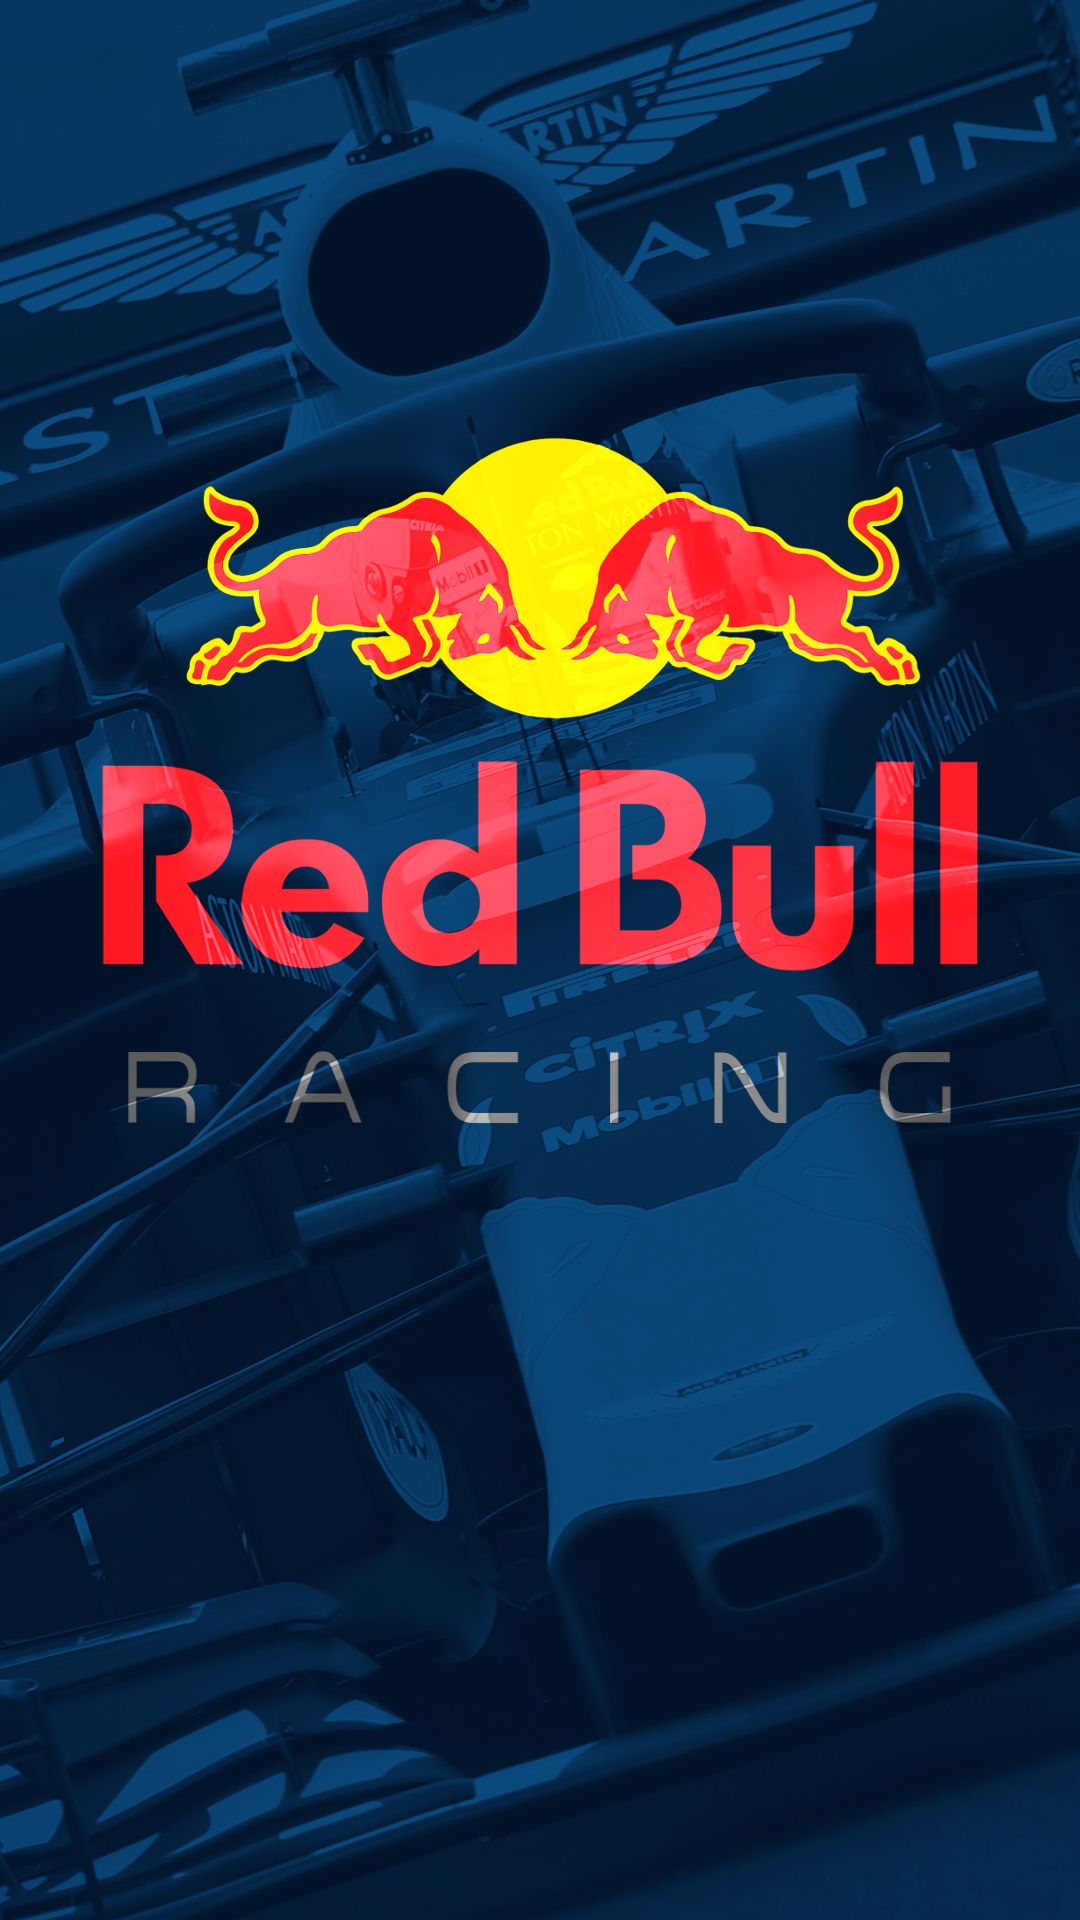 Red Bull F1 Racing Wallpapers - Top 30